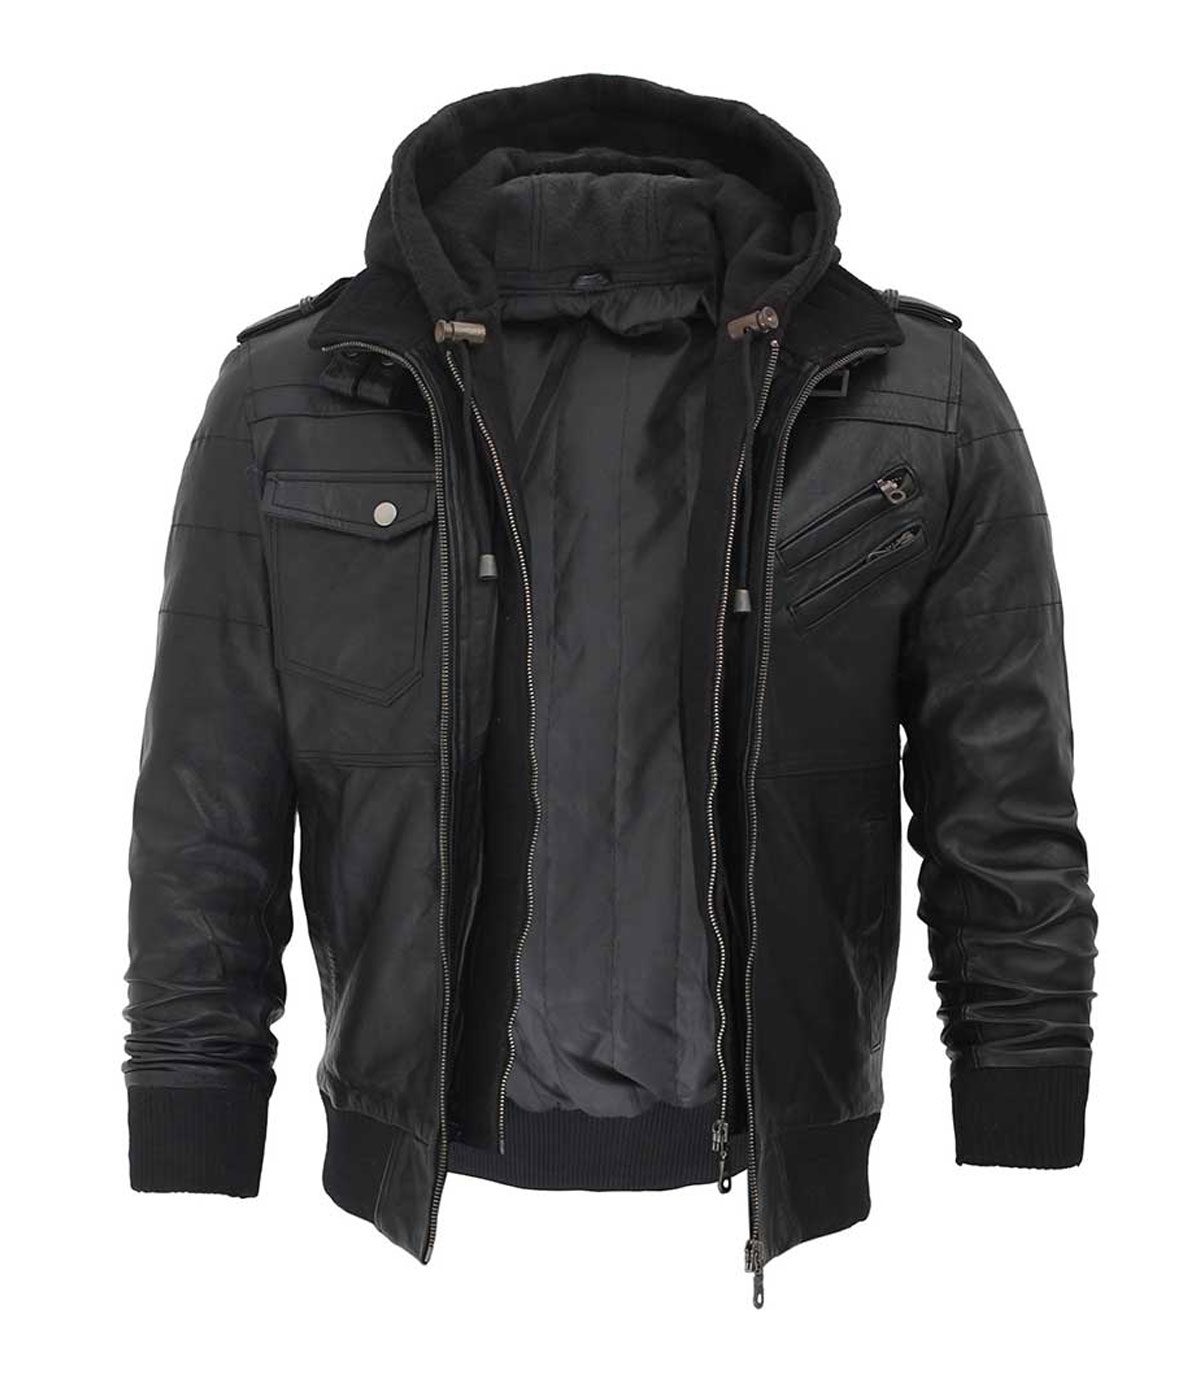 Edinburgh Mens Black Leather Jacket with Removeable Hood - Modern